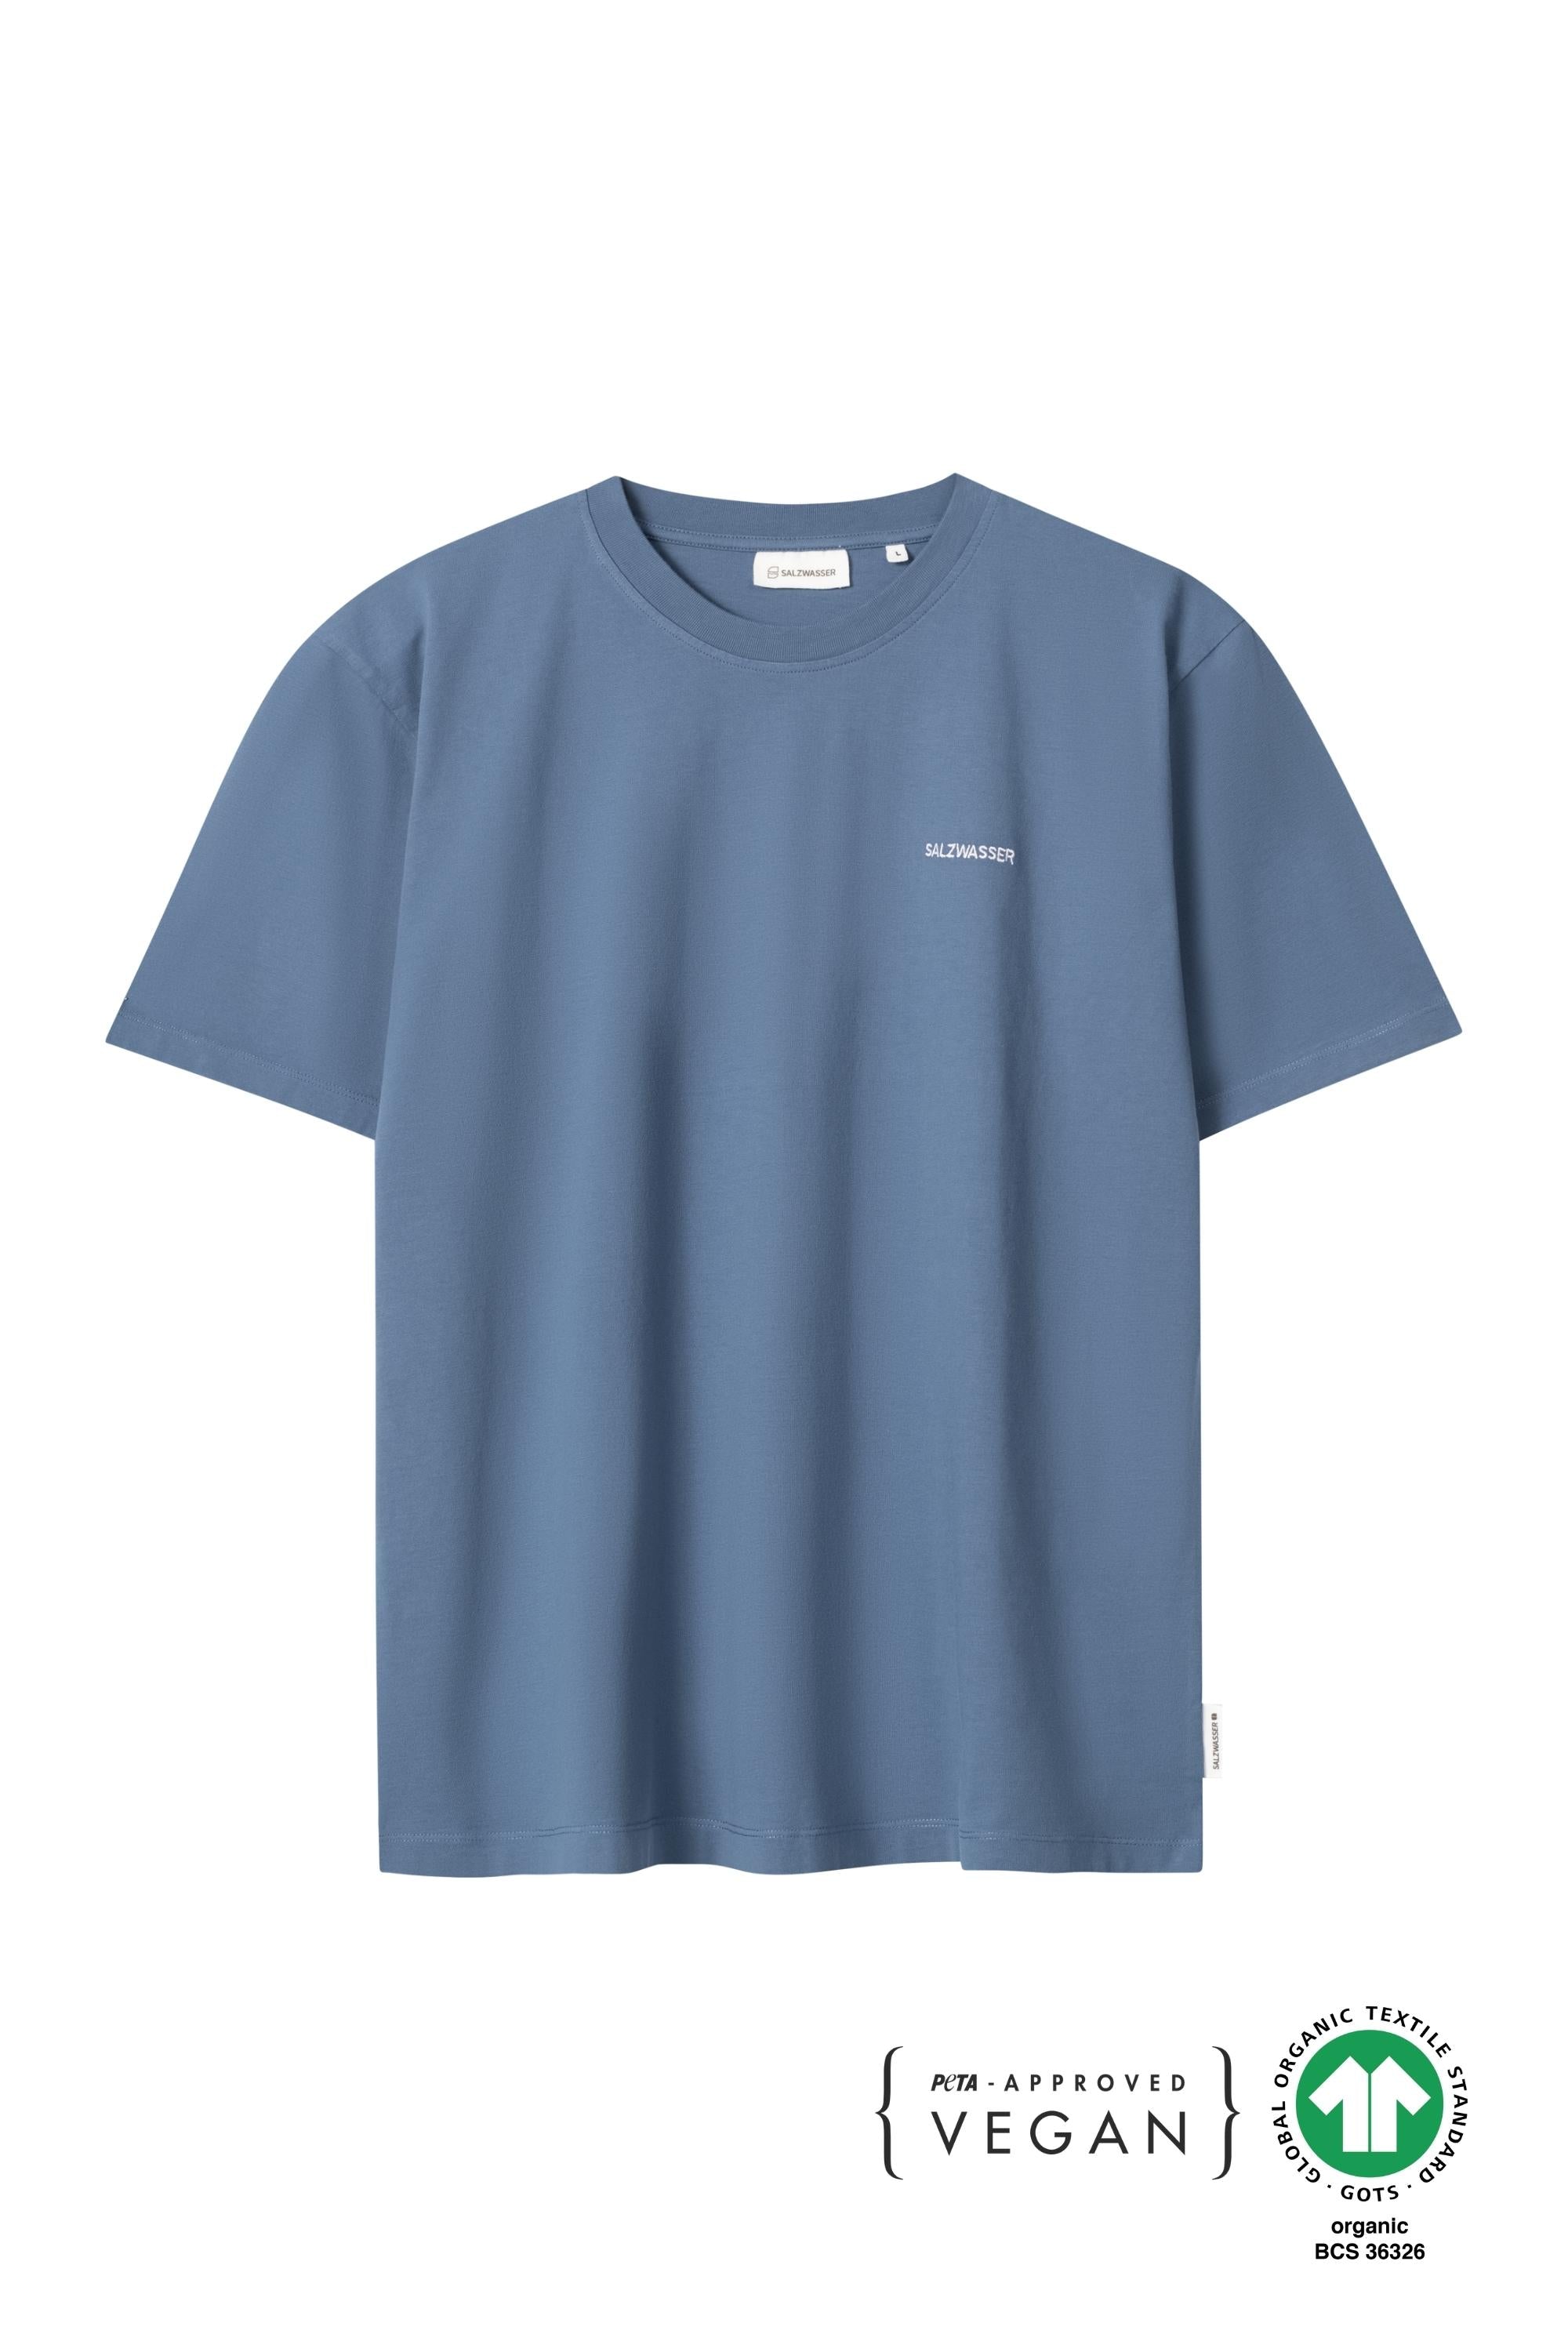 fair produziertes SALZWASSER T-Shirt in Indigo Blau als Unisex Fit vegan  _men _women